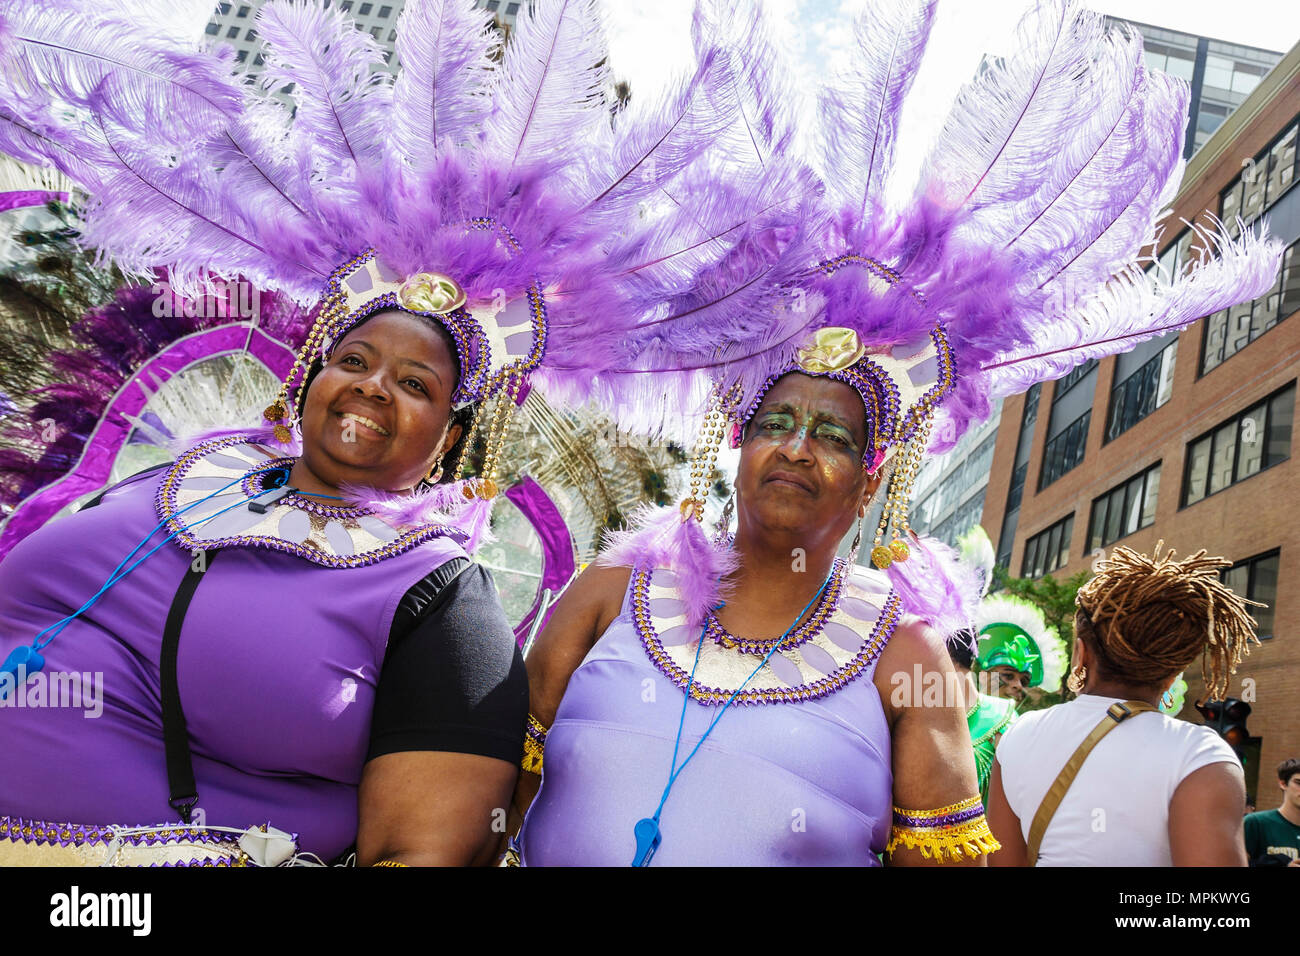 Montreal Canada,Quebec Province,Boulevard Rene Levesque,Carifiesta,Mardi Gras style Caribbean parade,costume,Black women,celebration,visitors travel t Stock Photo